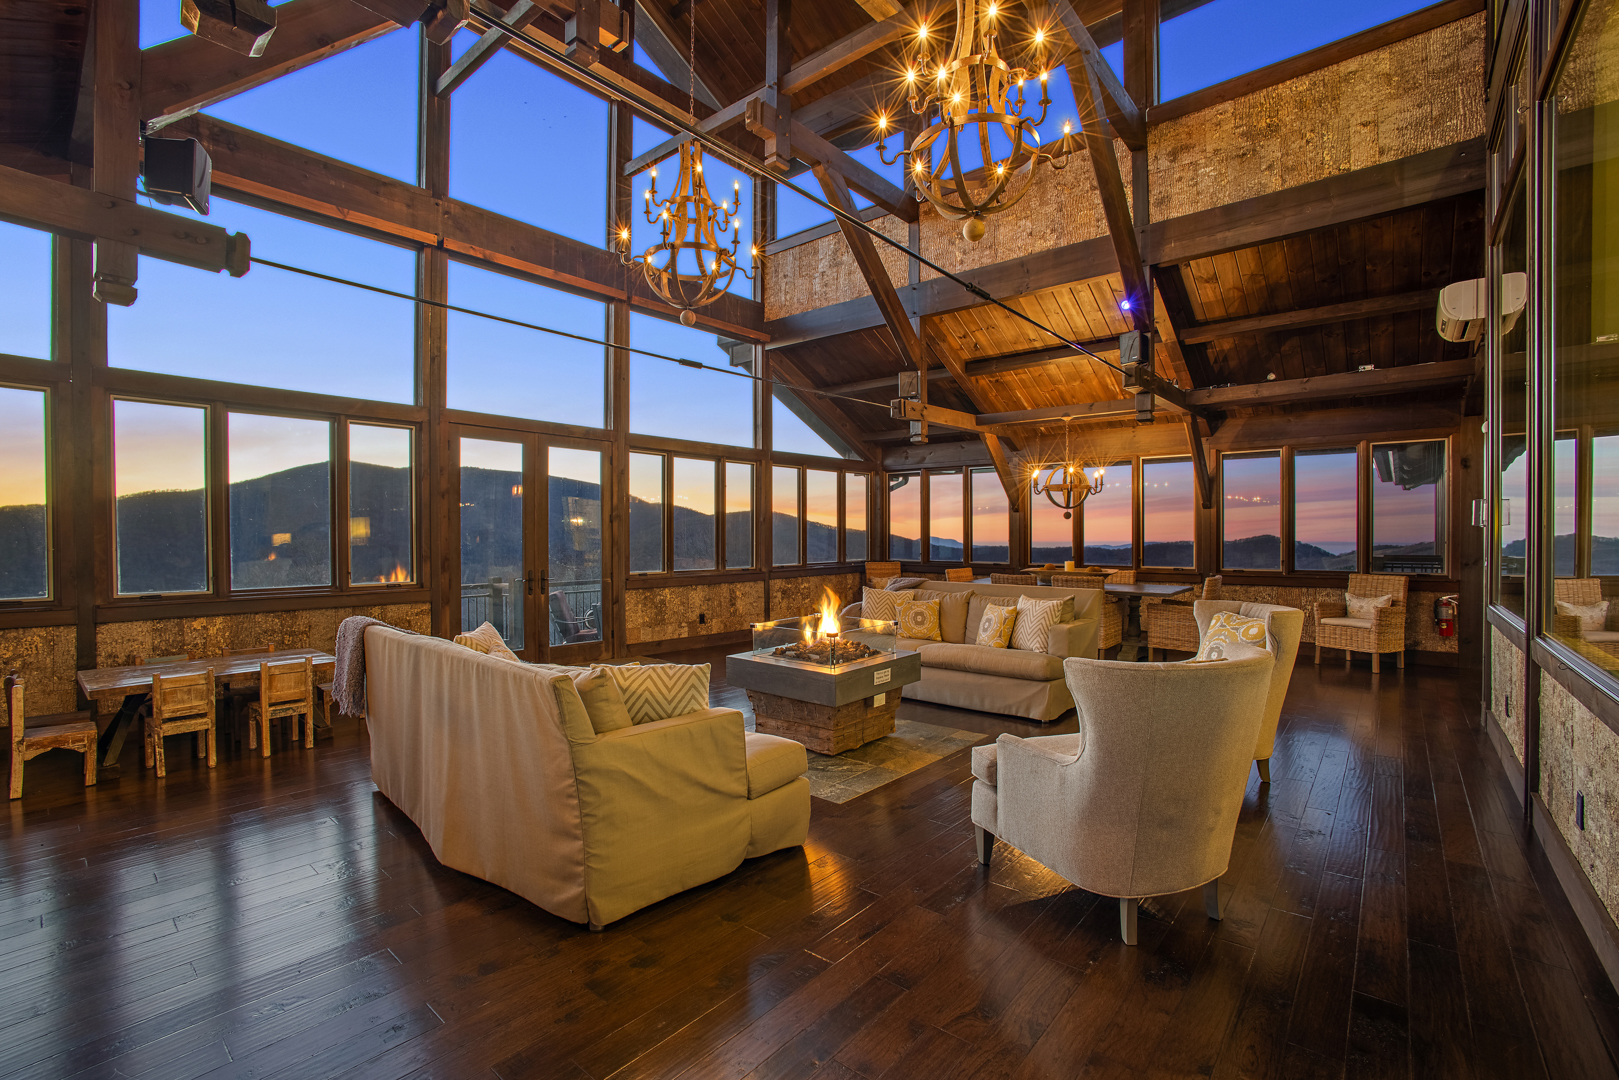 Carolina Cabin Rentals - Blue Ridge Mountains Vacation Rental Property